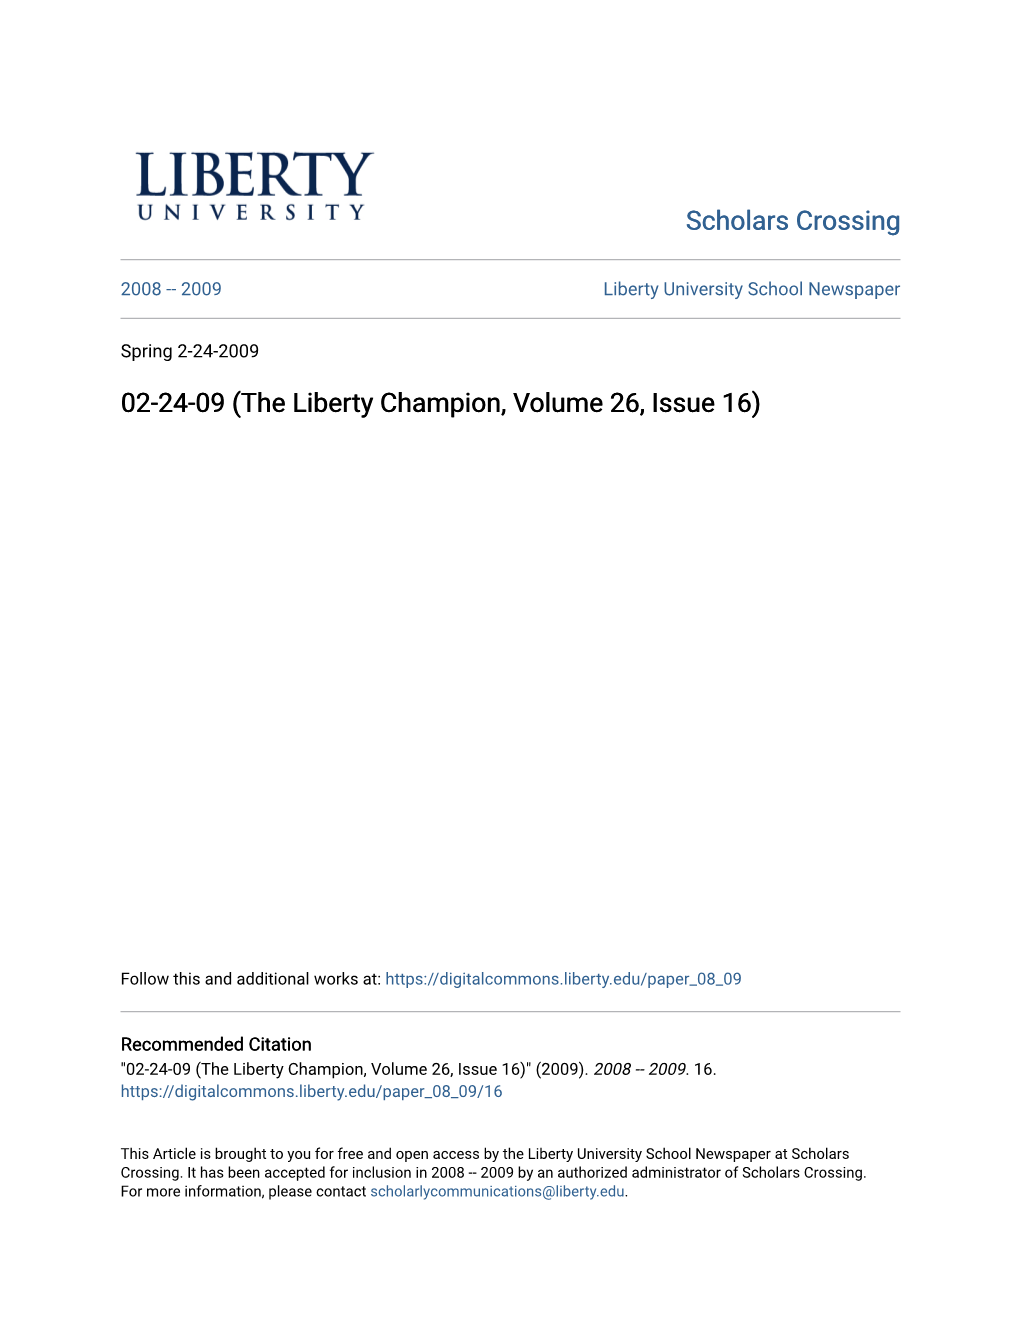 02-24-09 (The Liberty Champion, Volume 26, Issue 16)